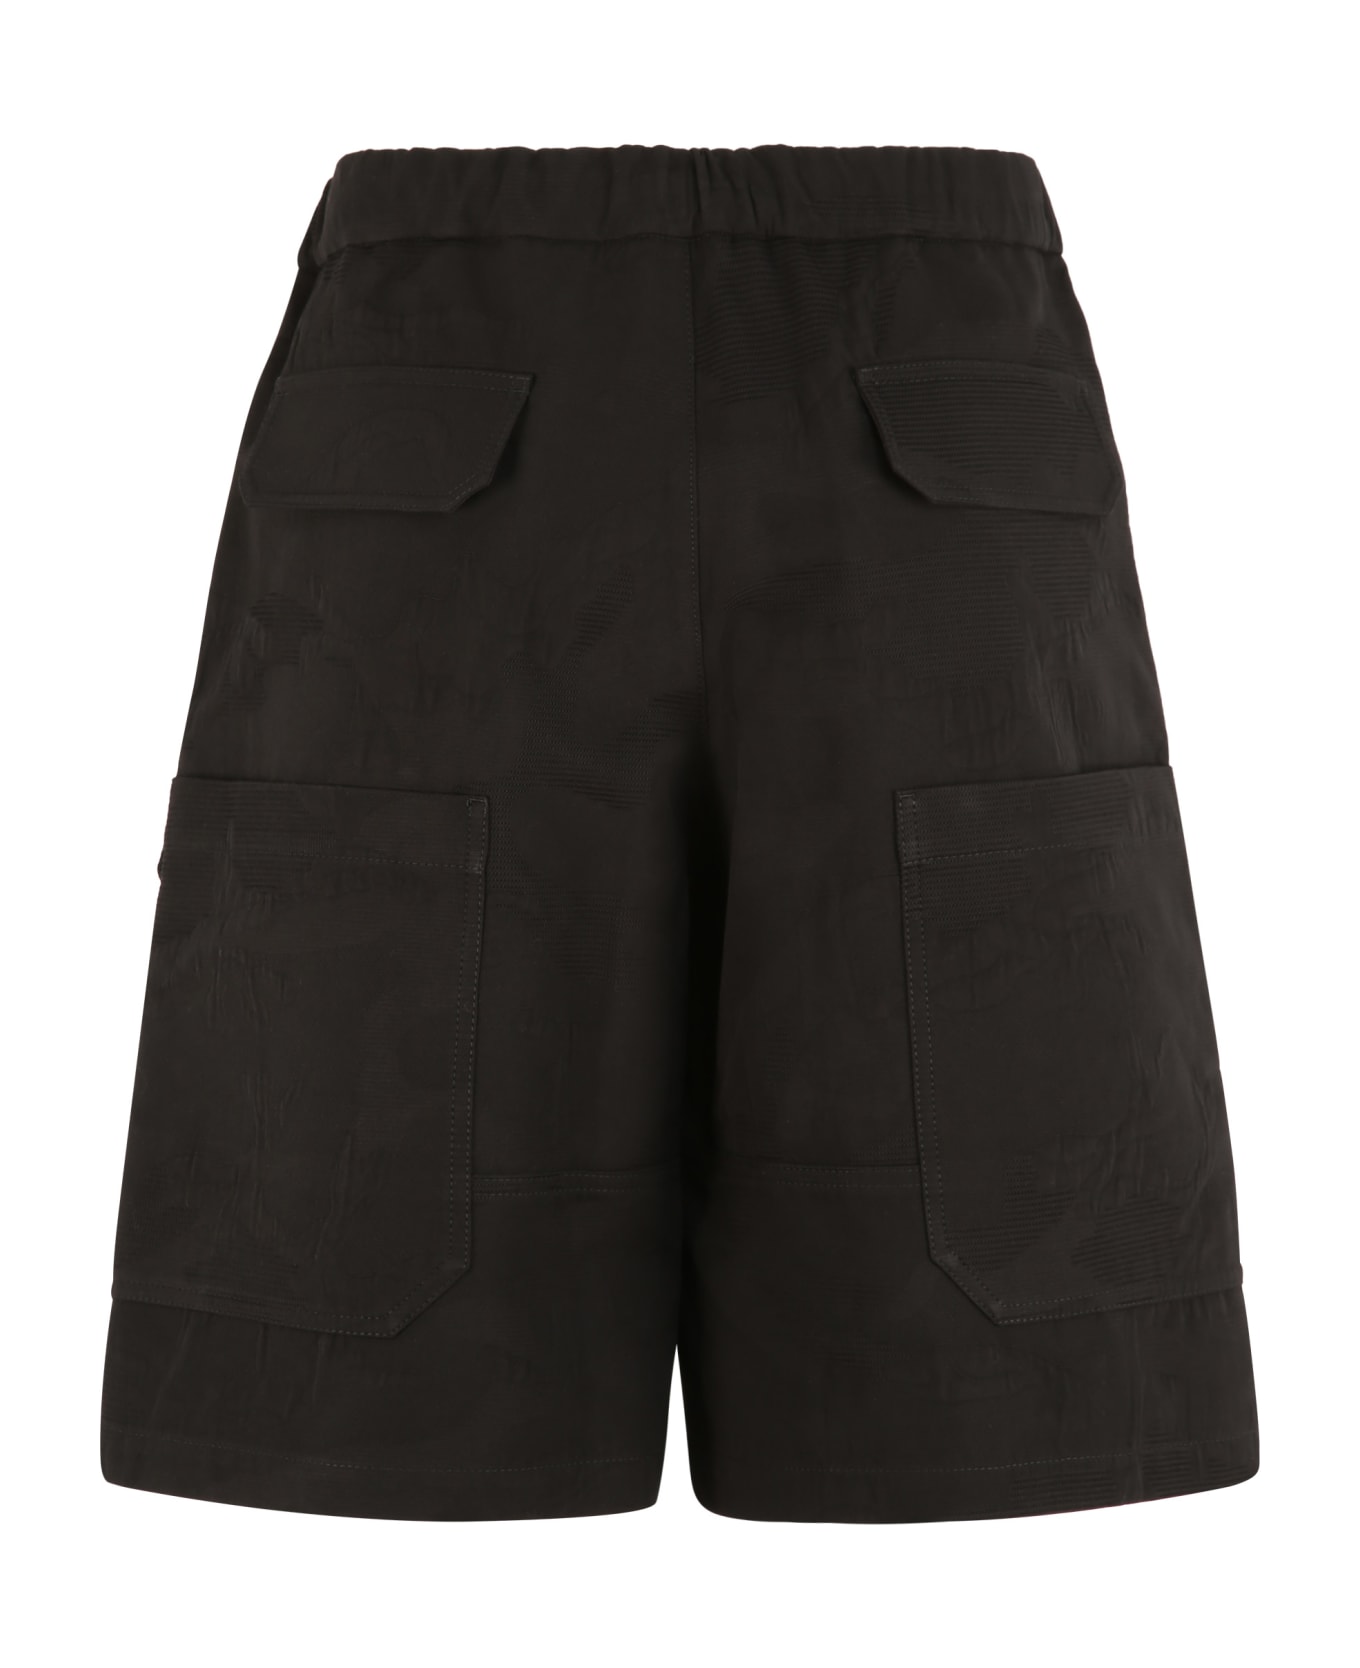 Valentino Cotton Cargo Bermuda Shorts - black